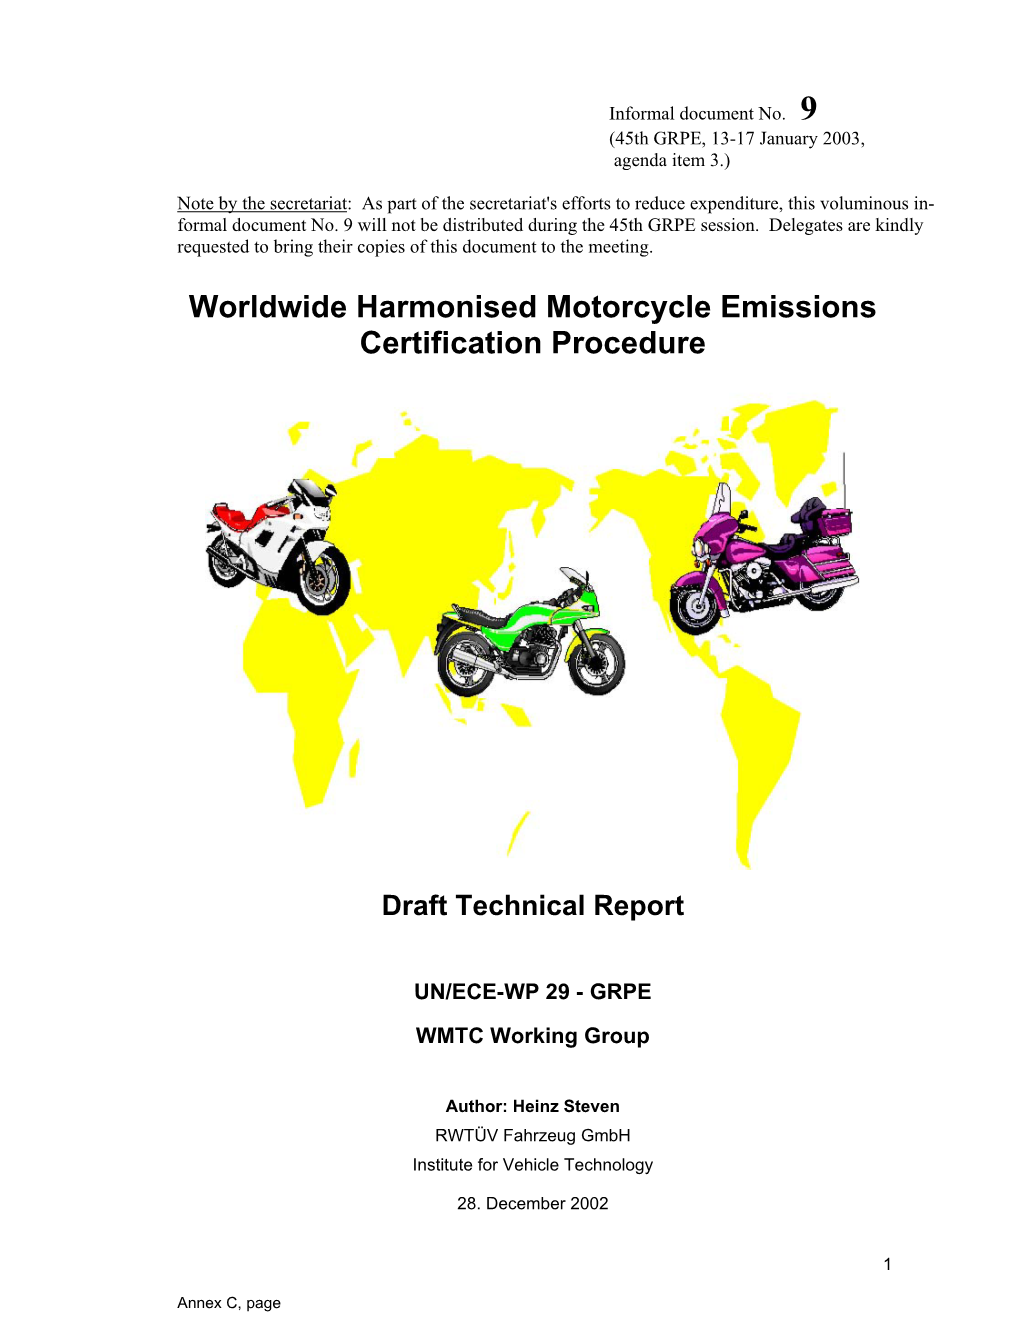 Worldwide Harmonised Motorcycle Emissions Certification Procedure